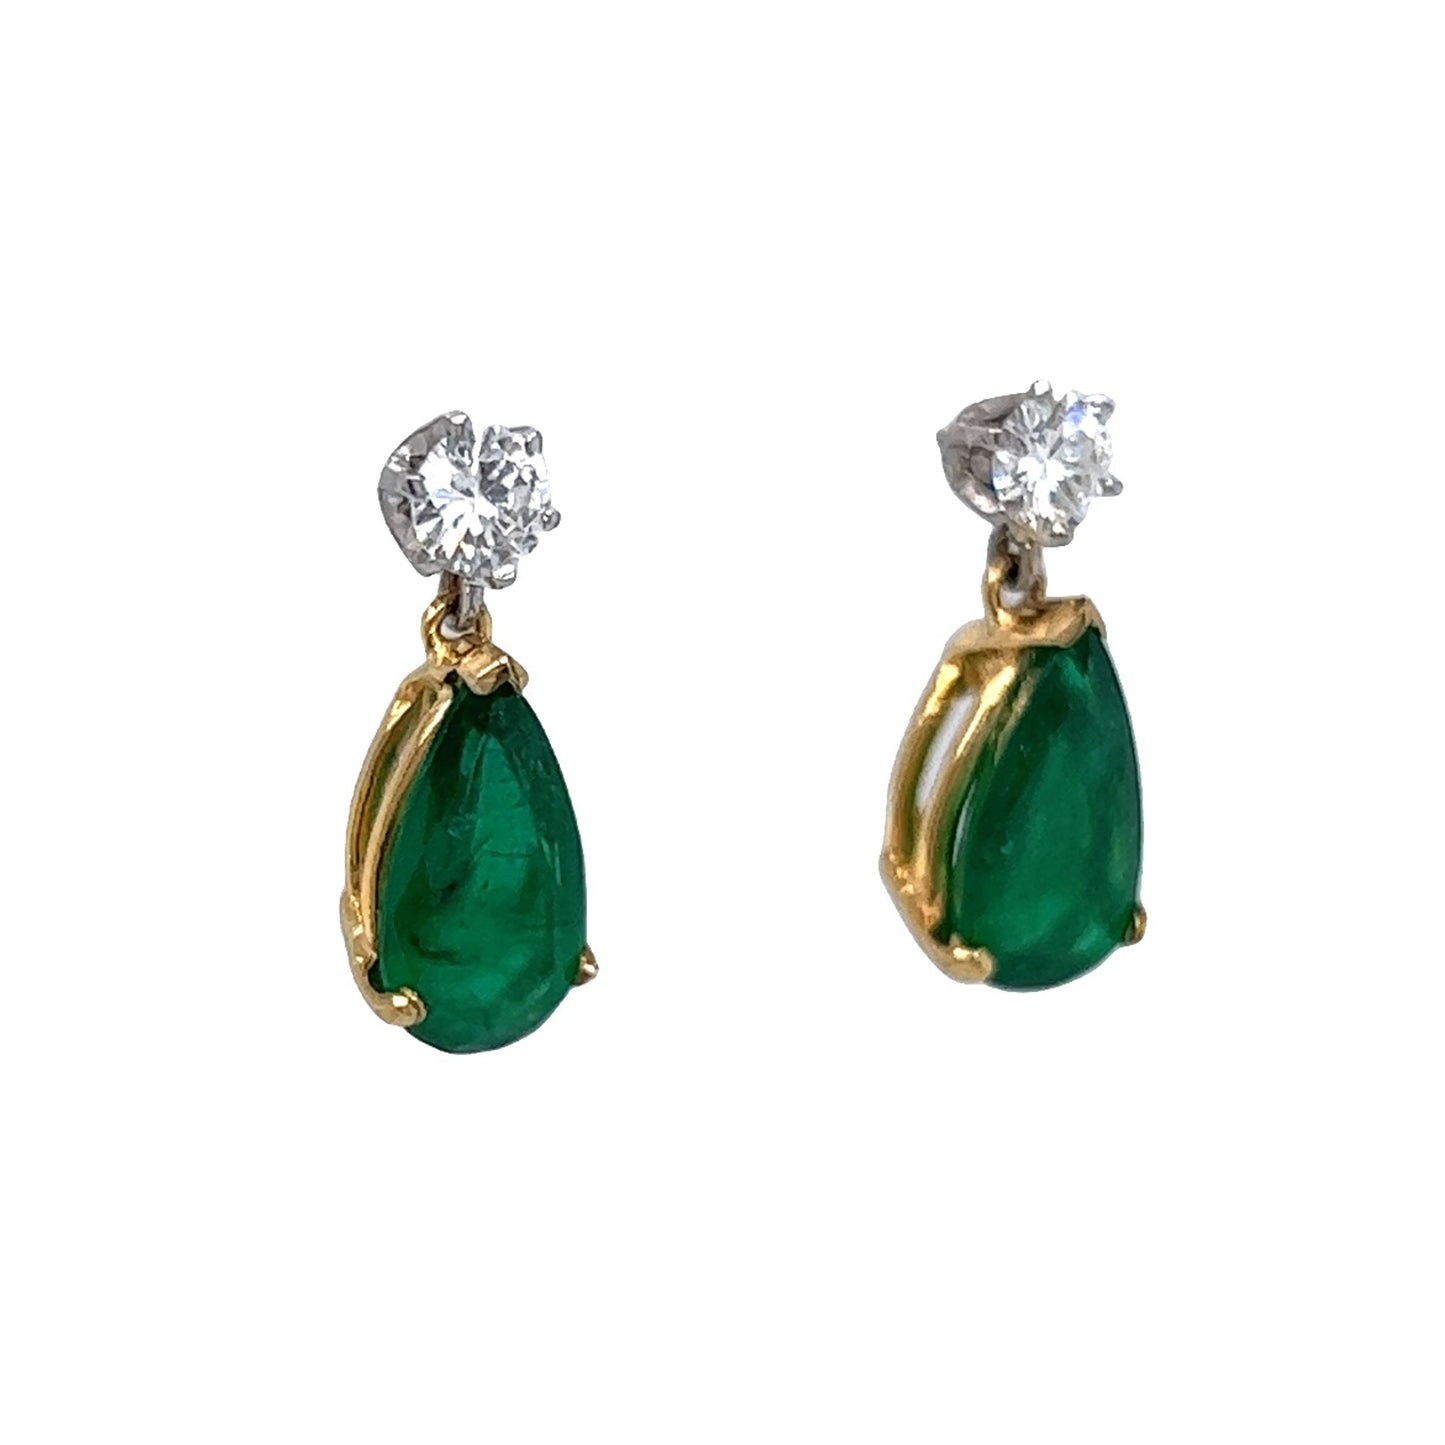 2.48 Emerald & Diamond Drop Earrings in 14k Yellow & White Gold